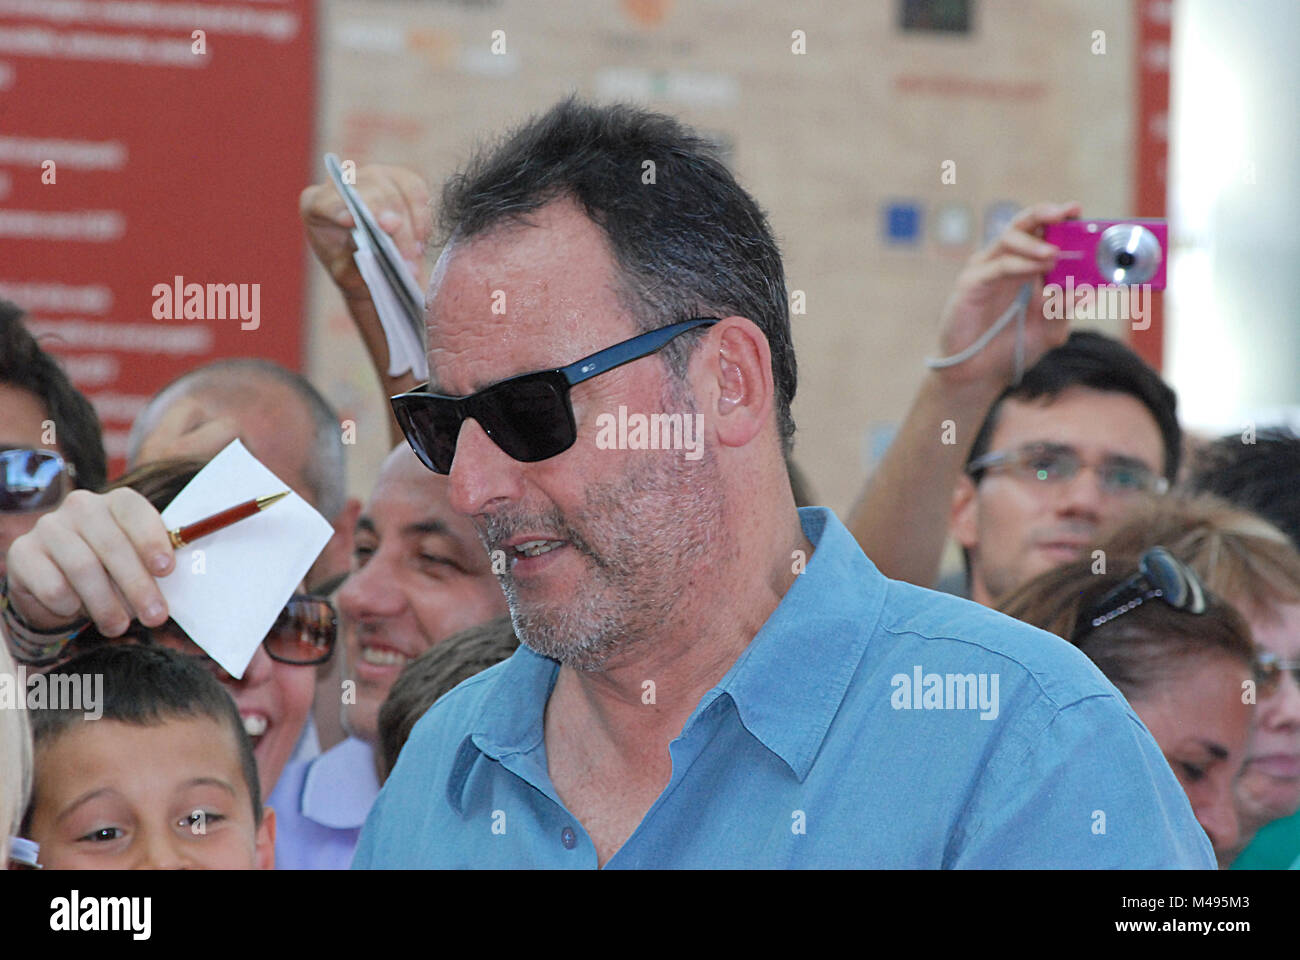 Giffoni, Sa, Italie - 21 juillet 2012 : Jean Reno à Giffoni Film Festival 2012 - le 21 juillet 2012 à Giffoni, Italie Banque D'Images